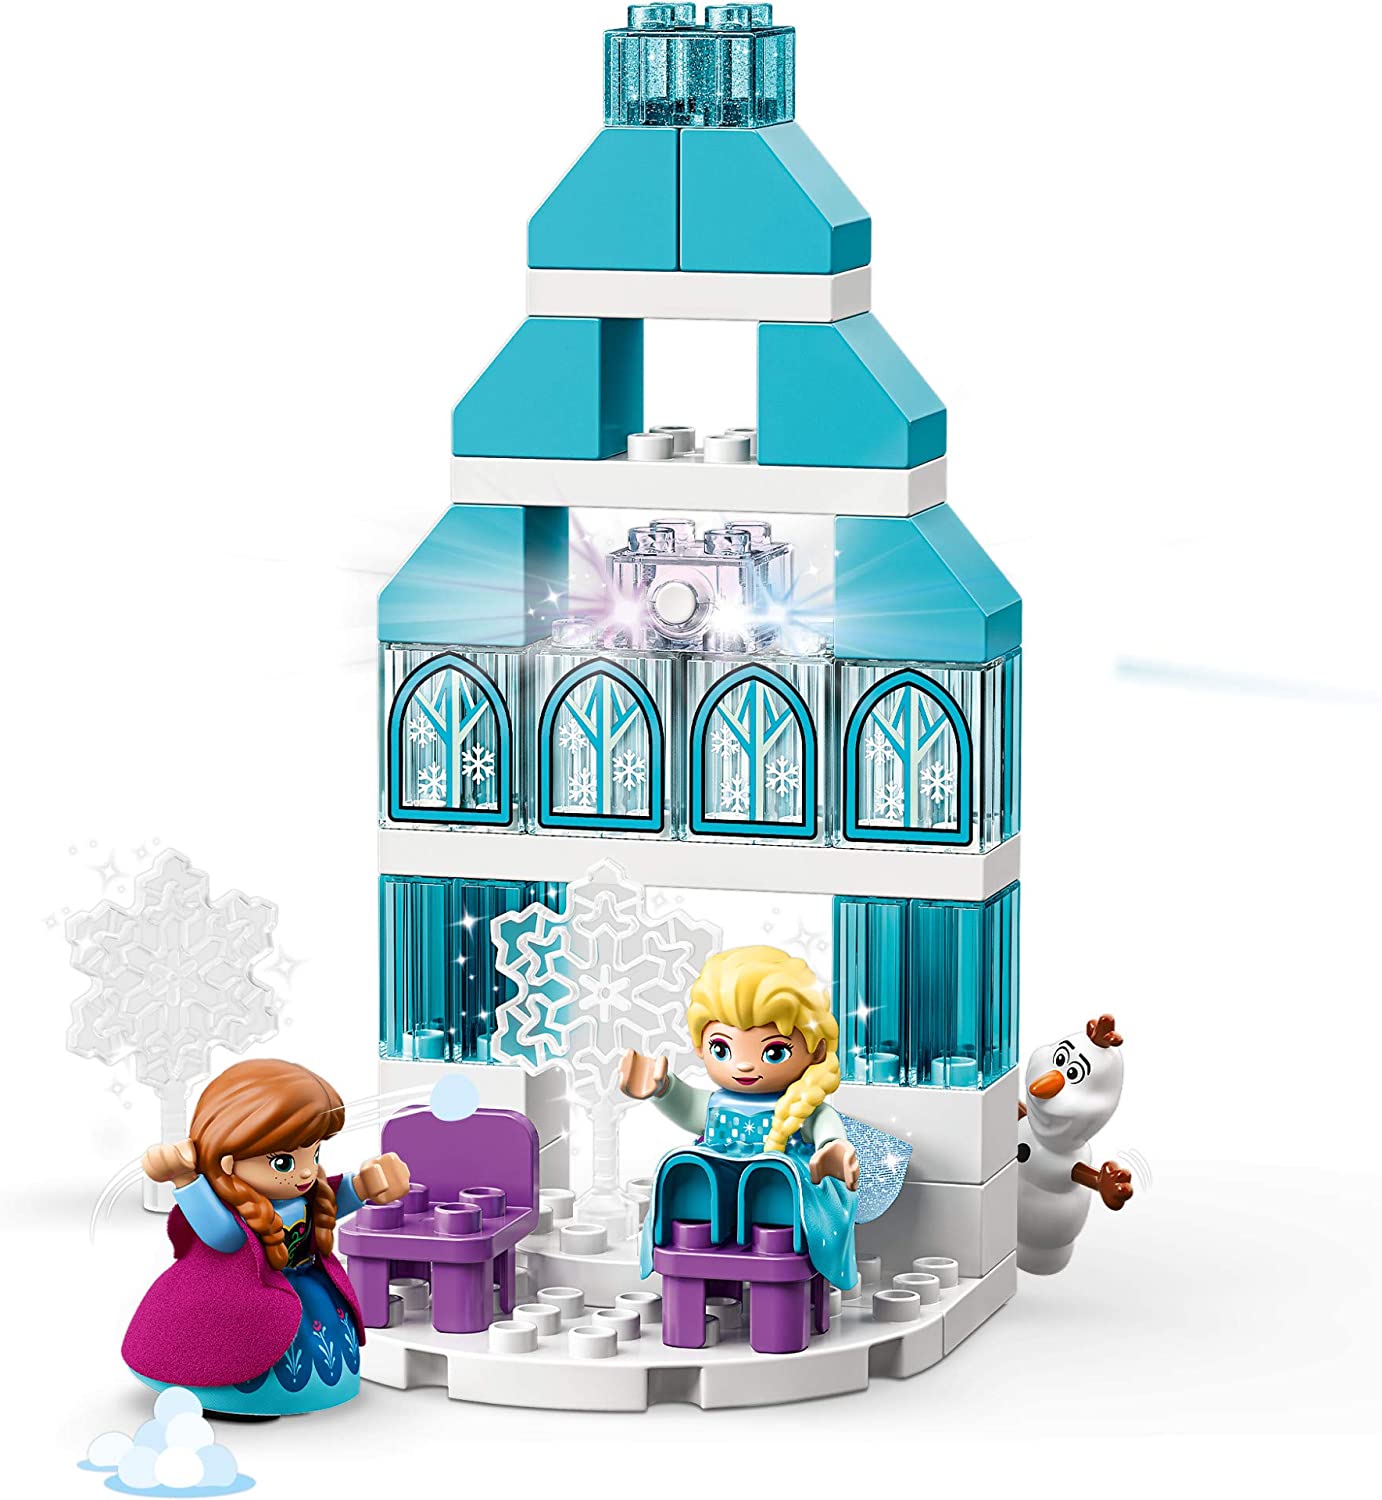 LEGO Duplo - Disney Frozen Ice Castle 10899